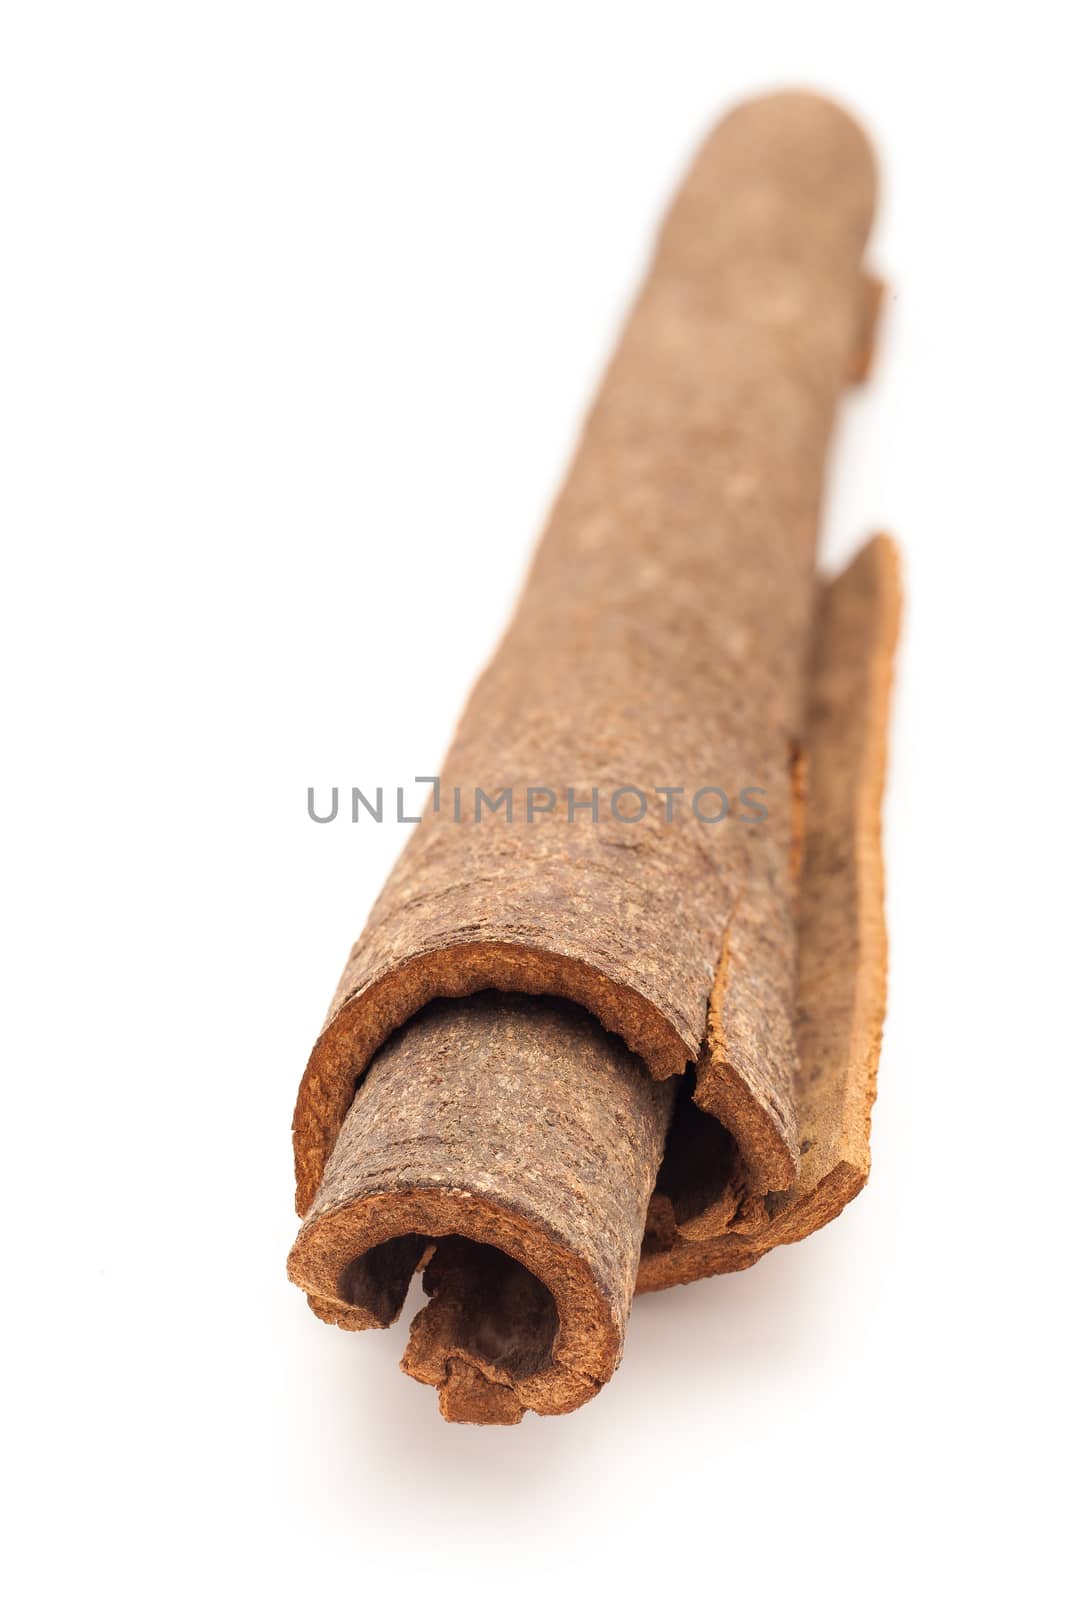 Close up of Cinnamon stick (Cinnamomum verum) isolated on white background.